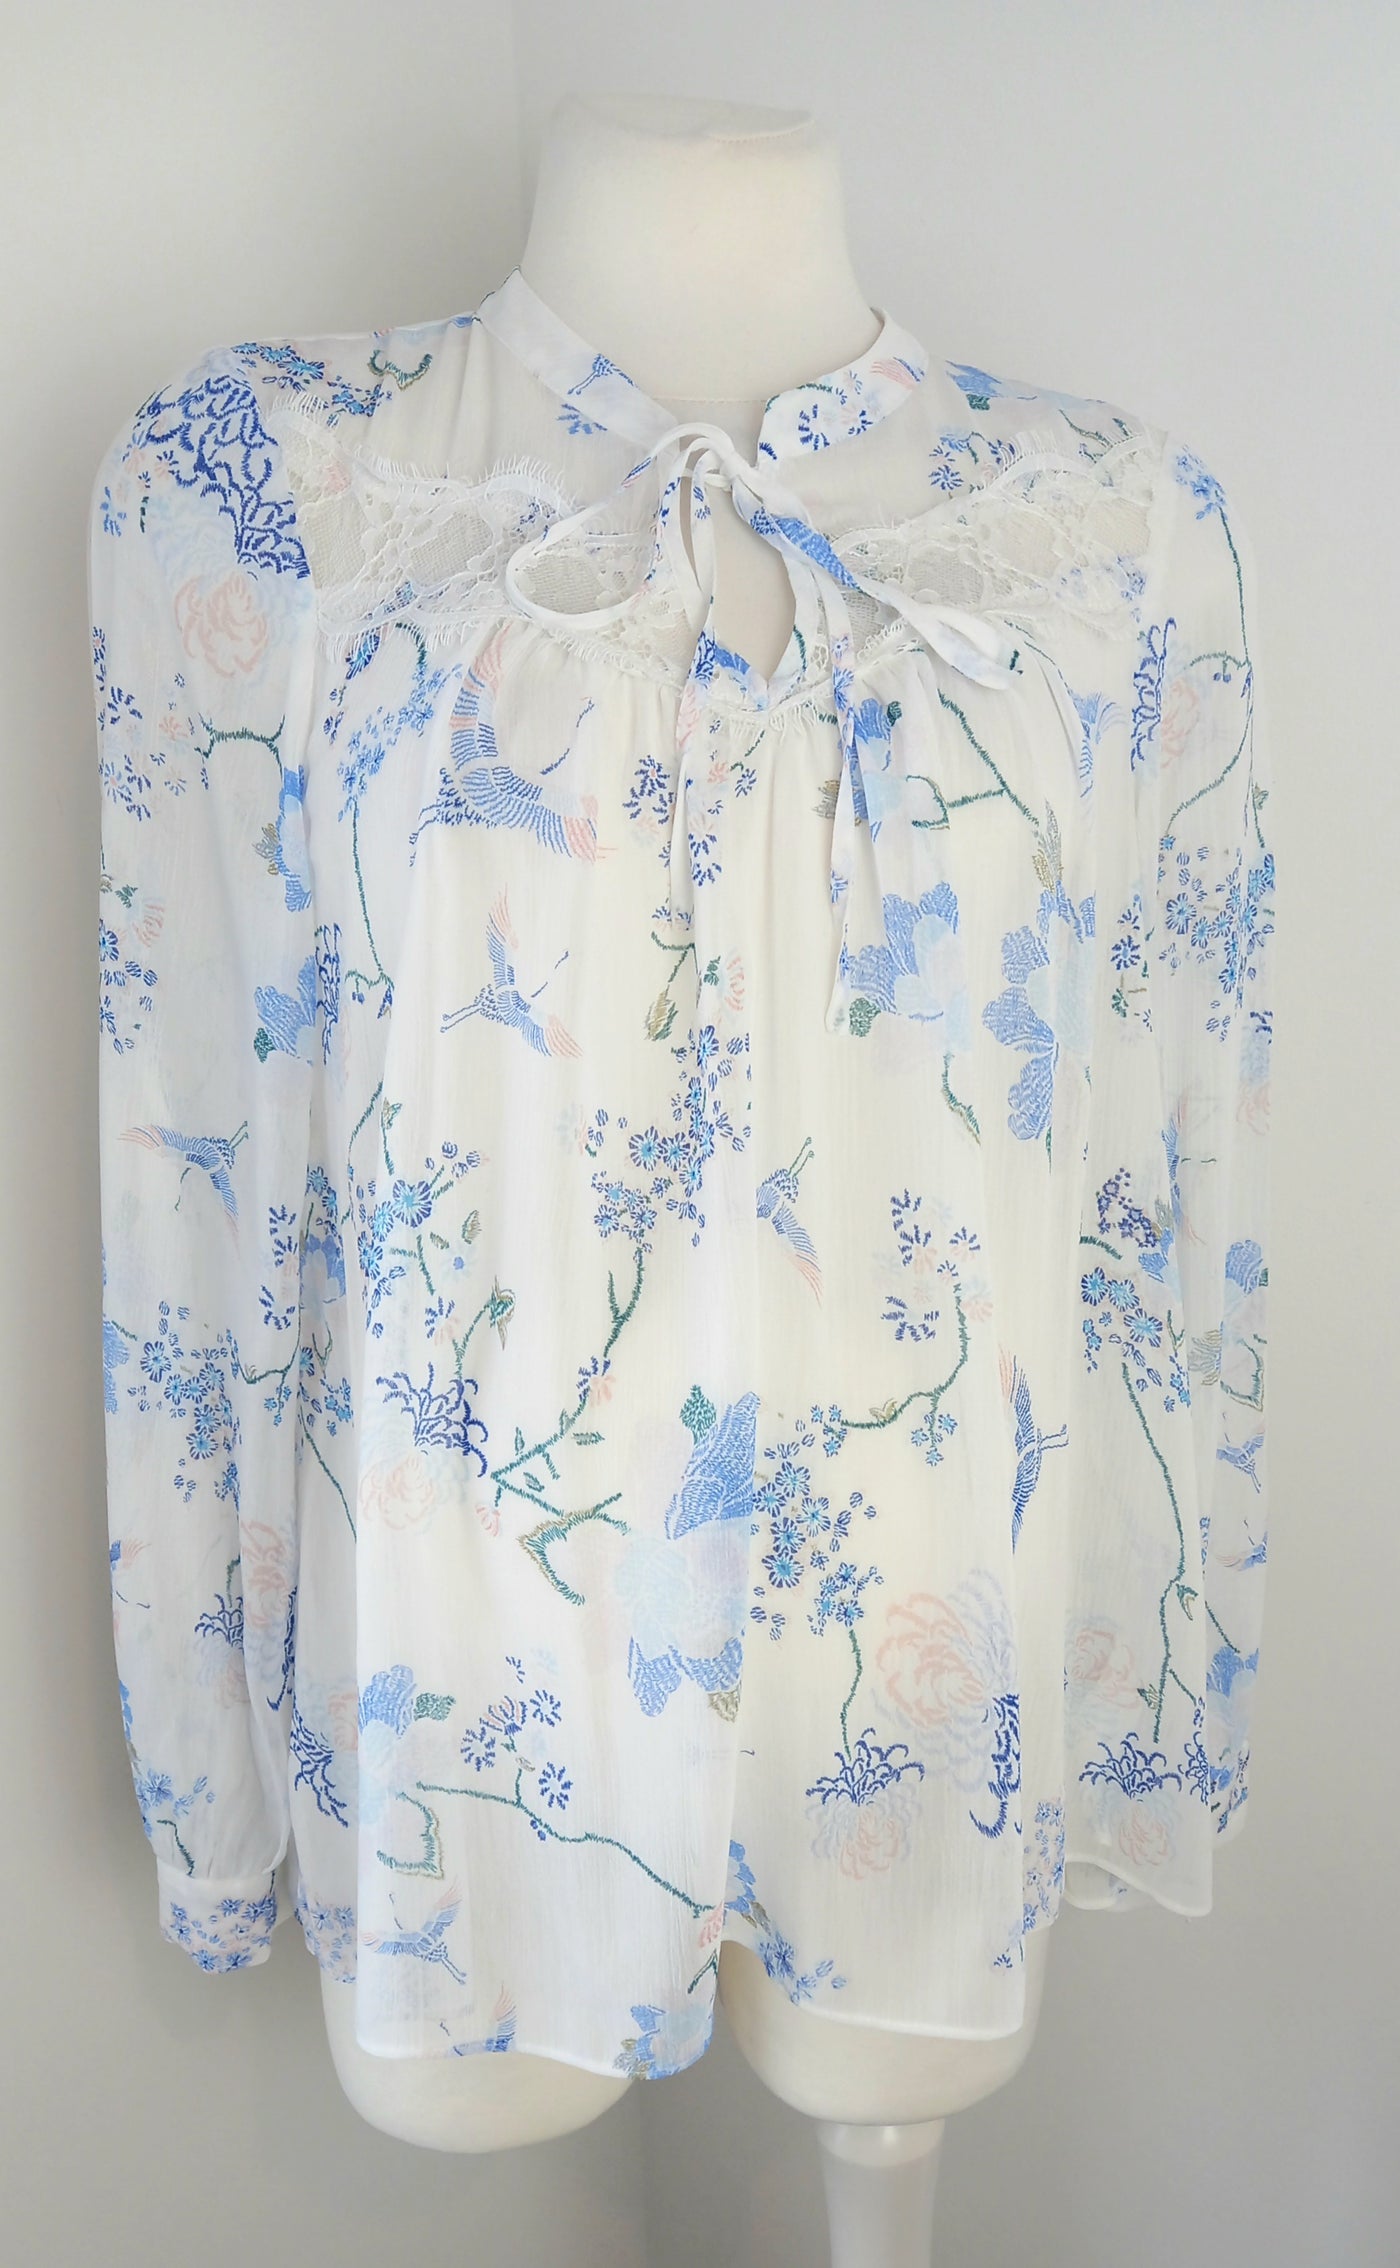 Primark White & Blue Floral Sheer Top - Size 10